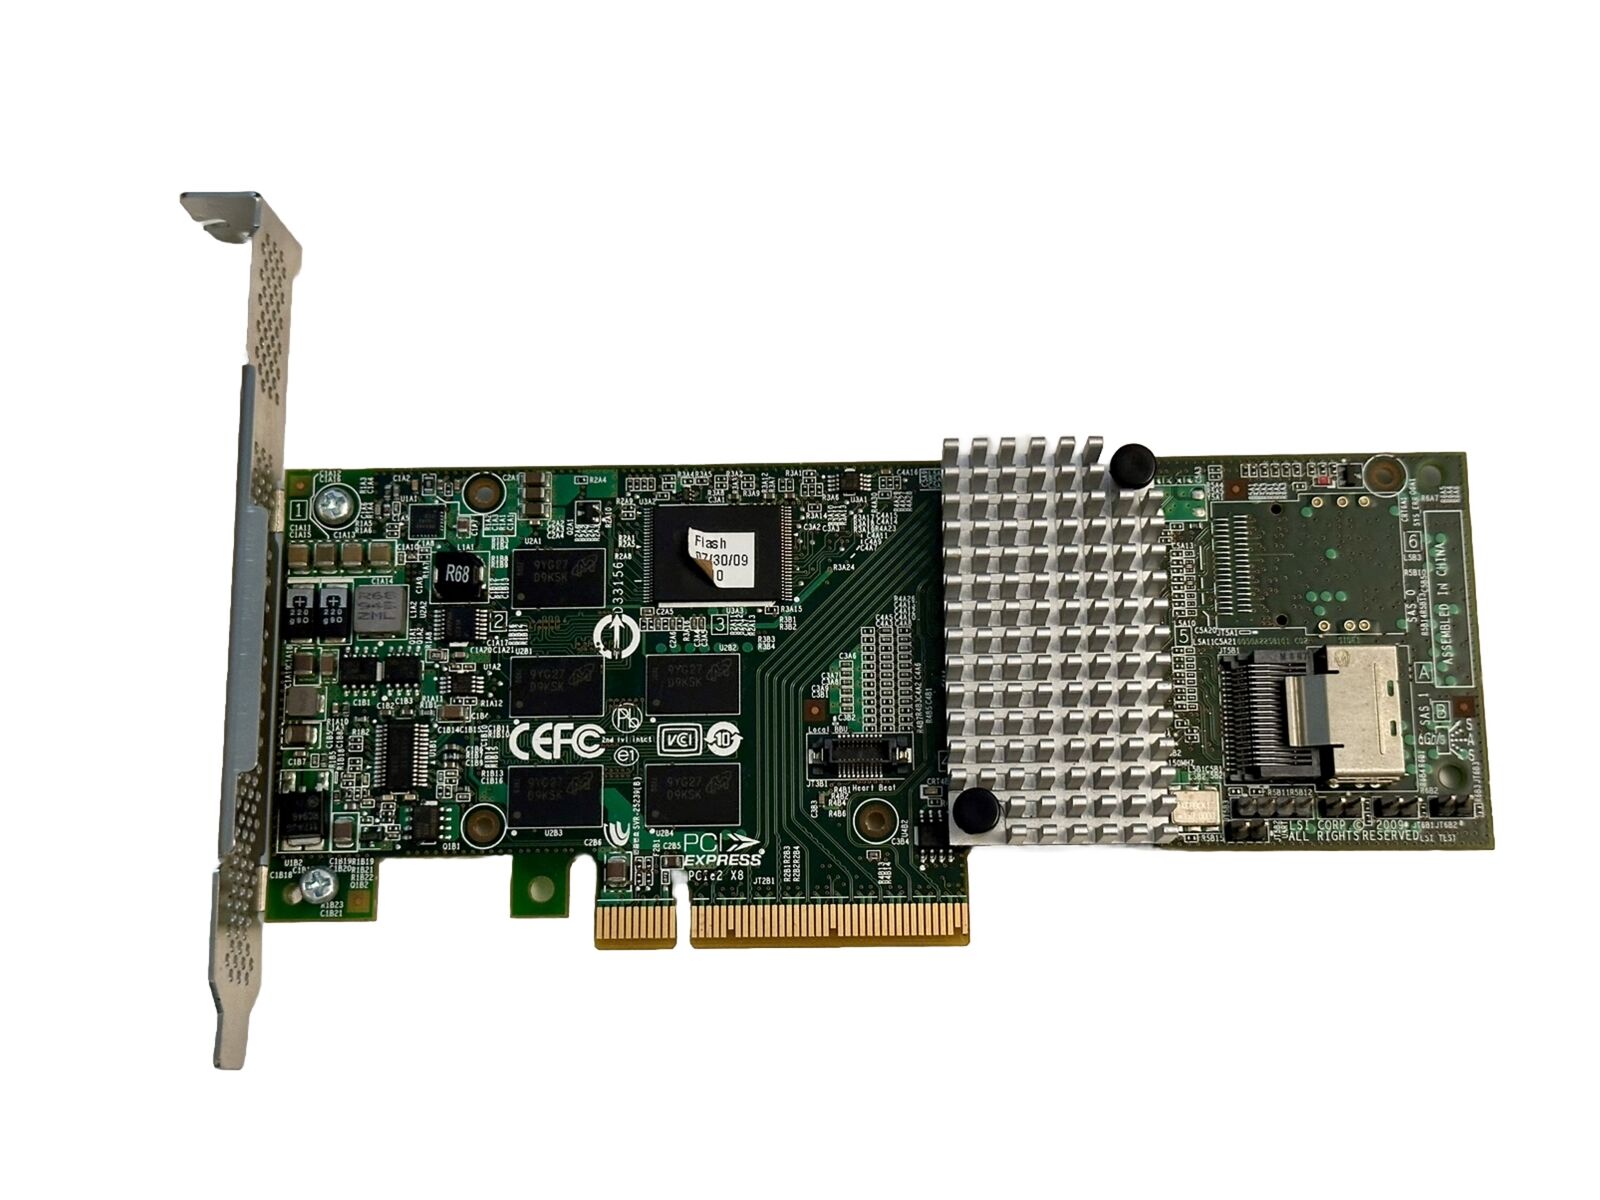 2 LSI L3-25239-12B 6Gb/s 4-Port SAS SATA PCI-E RAID Controller Card *NO BATTERY*